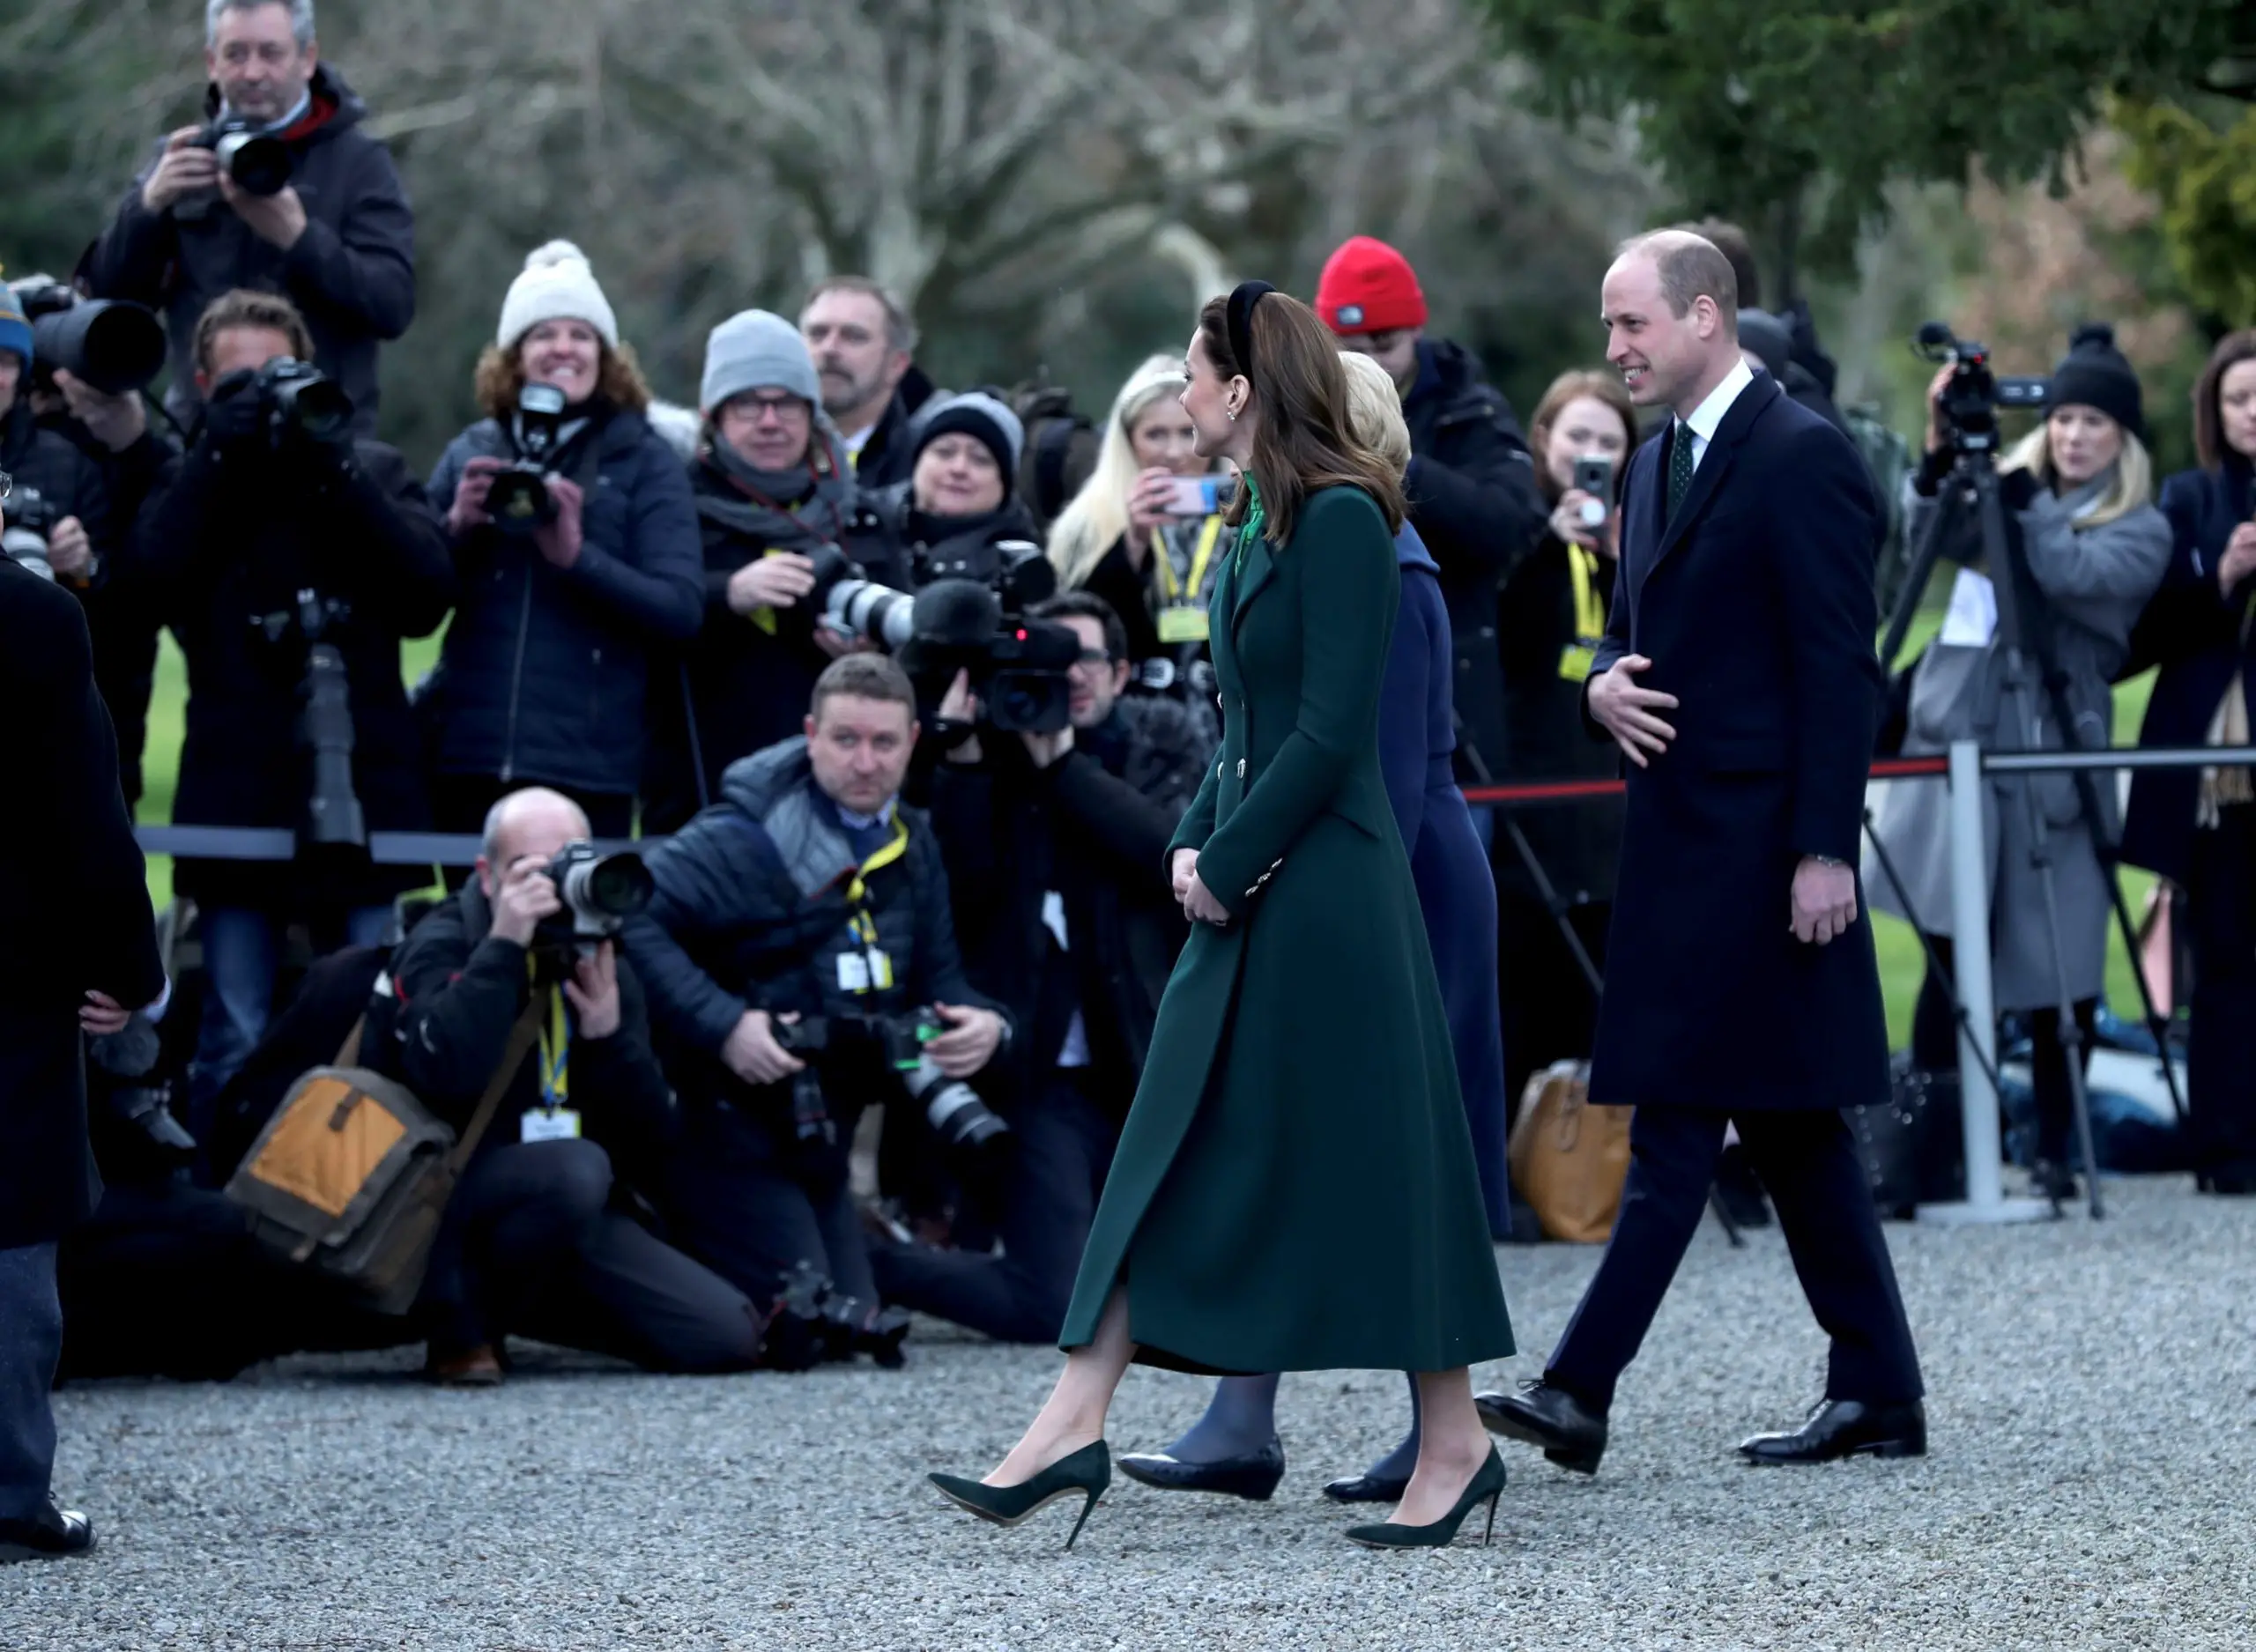 The Duke and Duchess of Cambridge enjoyed a walk around the President House in Ireland